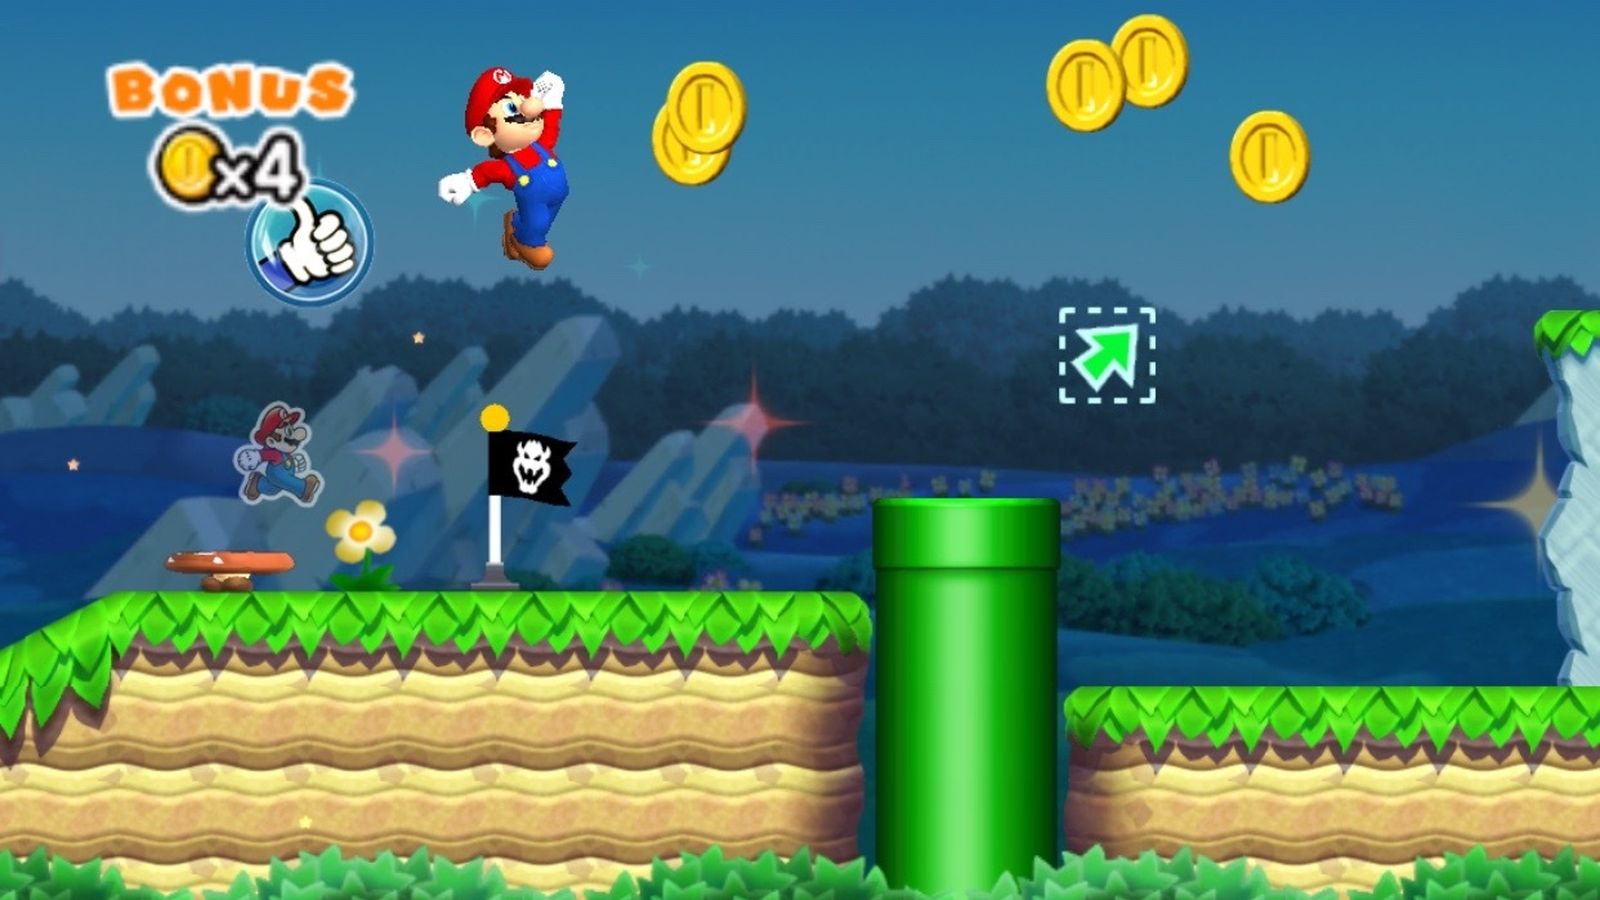 Screenshot of Super Mario Run gameplay with Mario collecting coins.